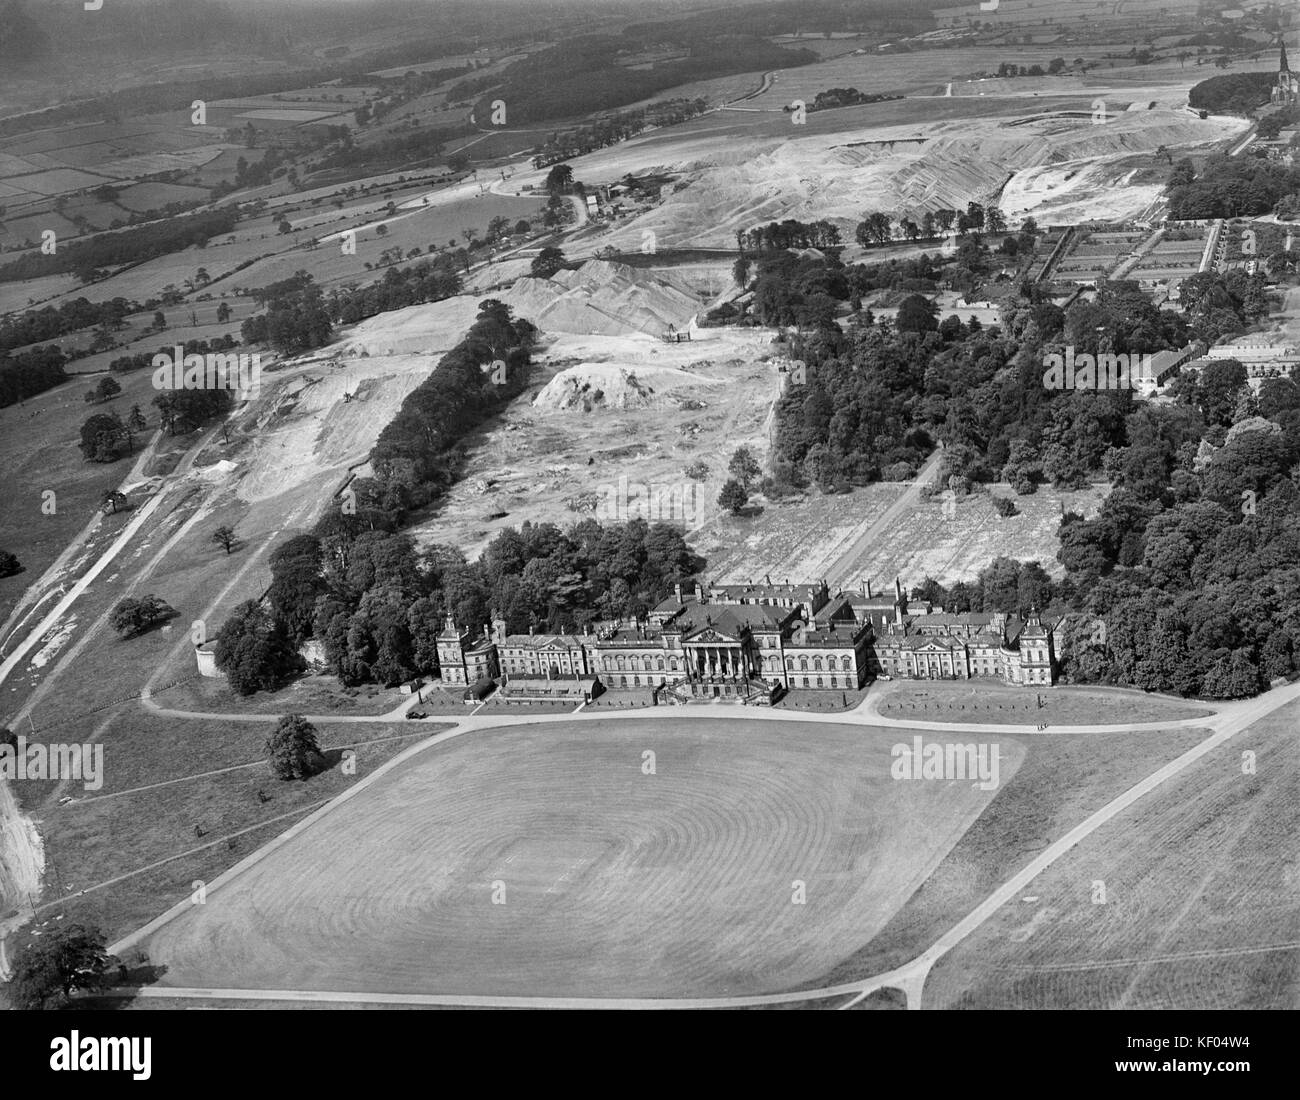 Wentworth Woodhouse, Rotherham, South Yorkshire. Vista aerea da Aeropictorial. Agosto 1946. Foto Stock